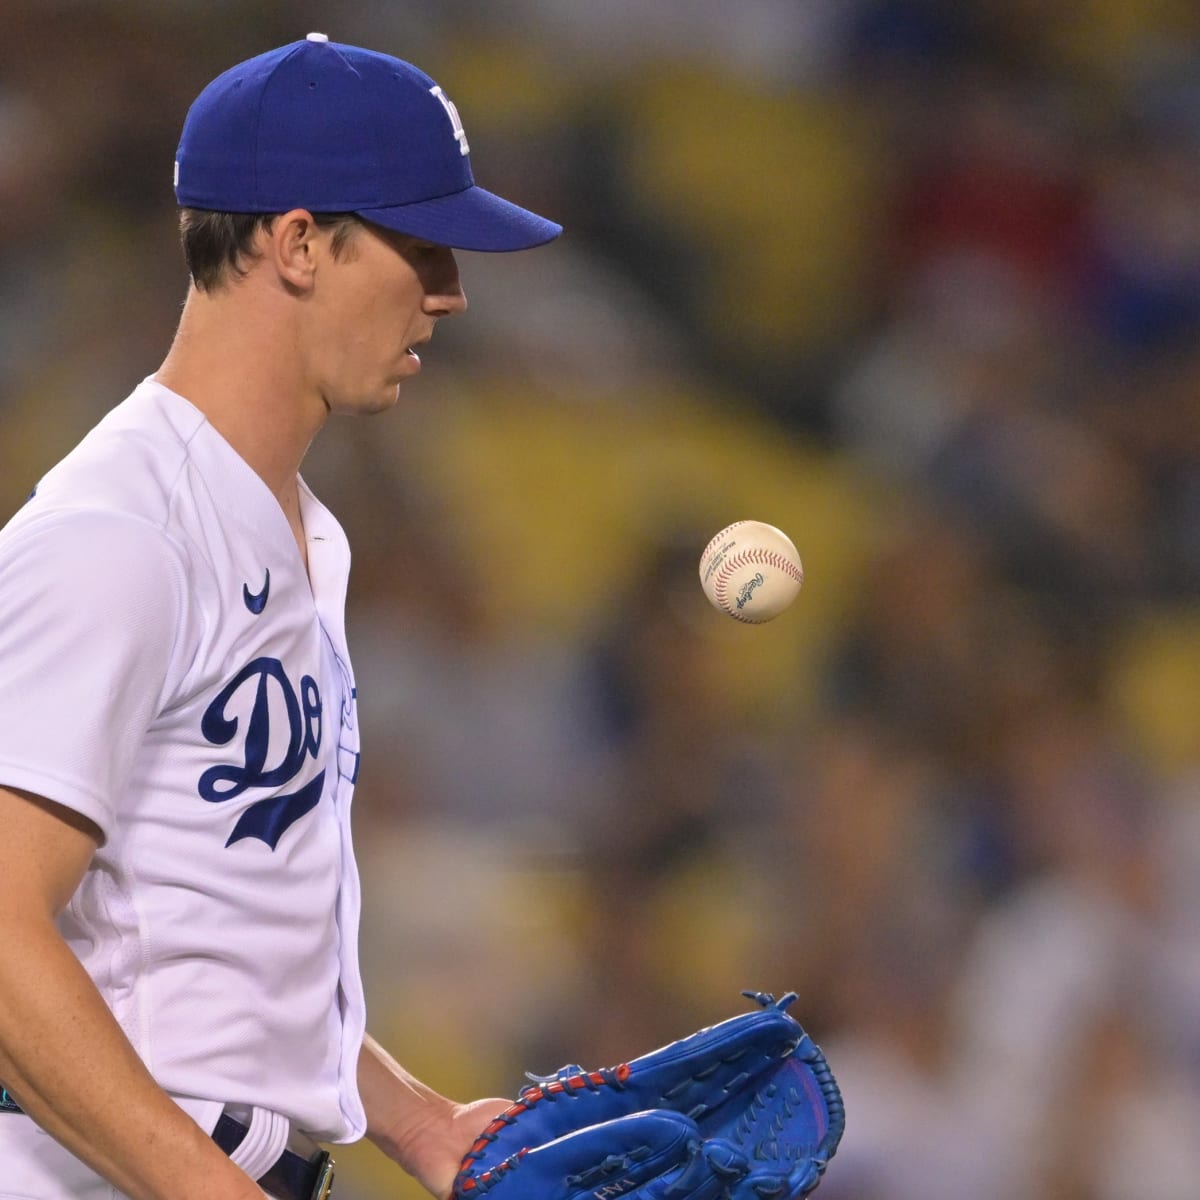 Dodgers' star pitcher Walker Buehler to undergo season-ending